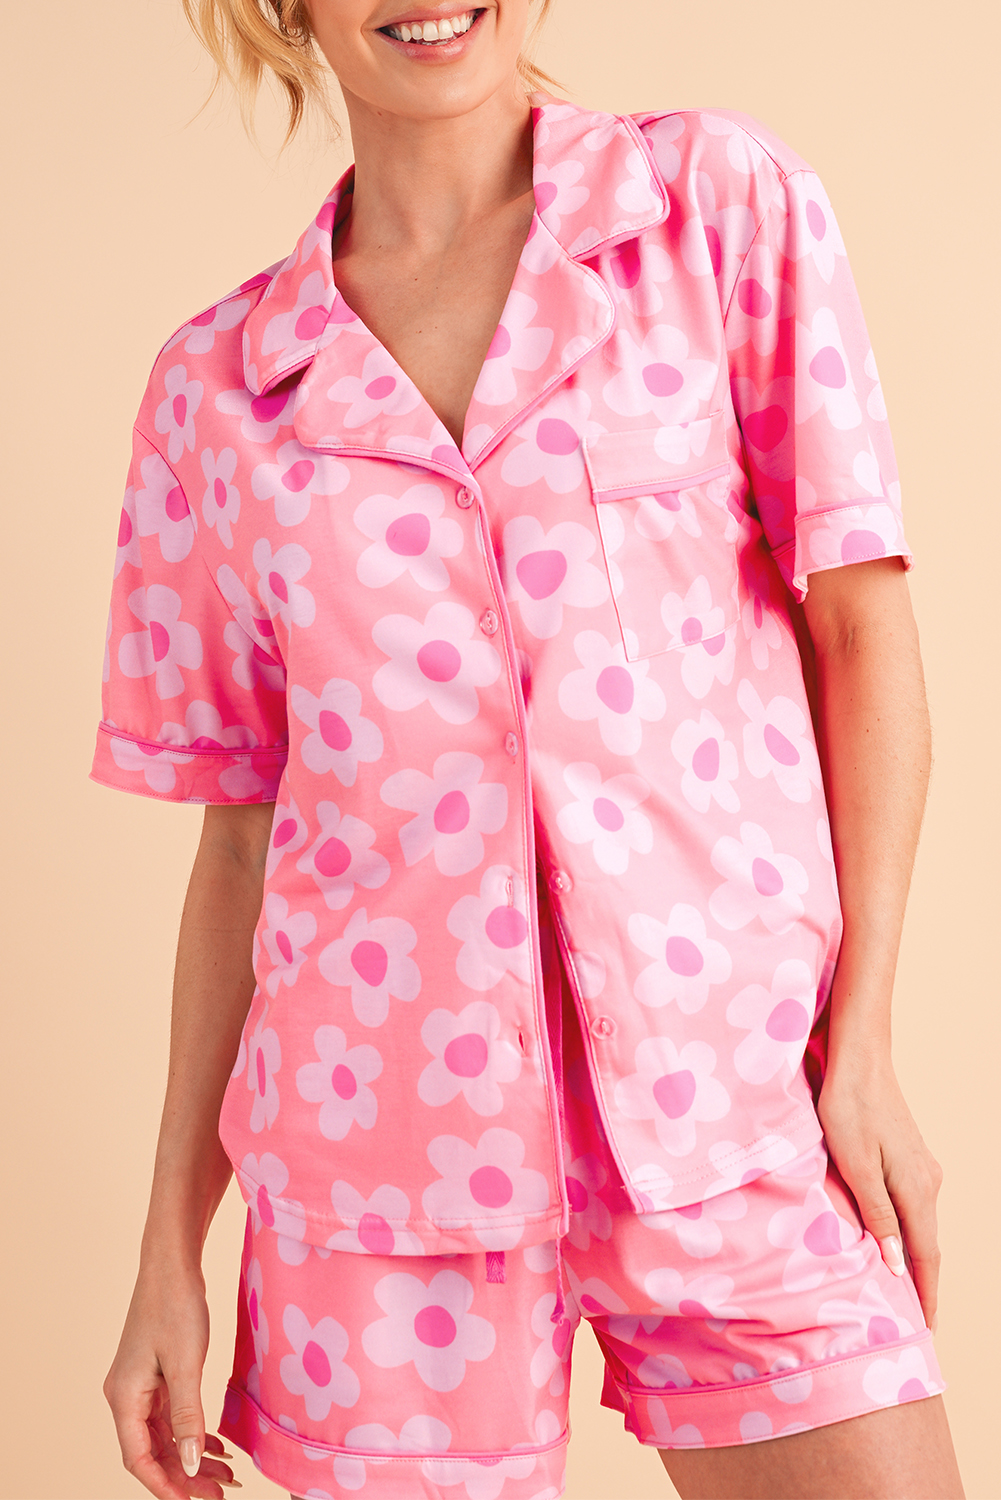 Shewin Wholesale Chic Women Pink 60s FLOWER Print Buttoned Shirt and Drawstring Waist Pajama Set